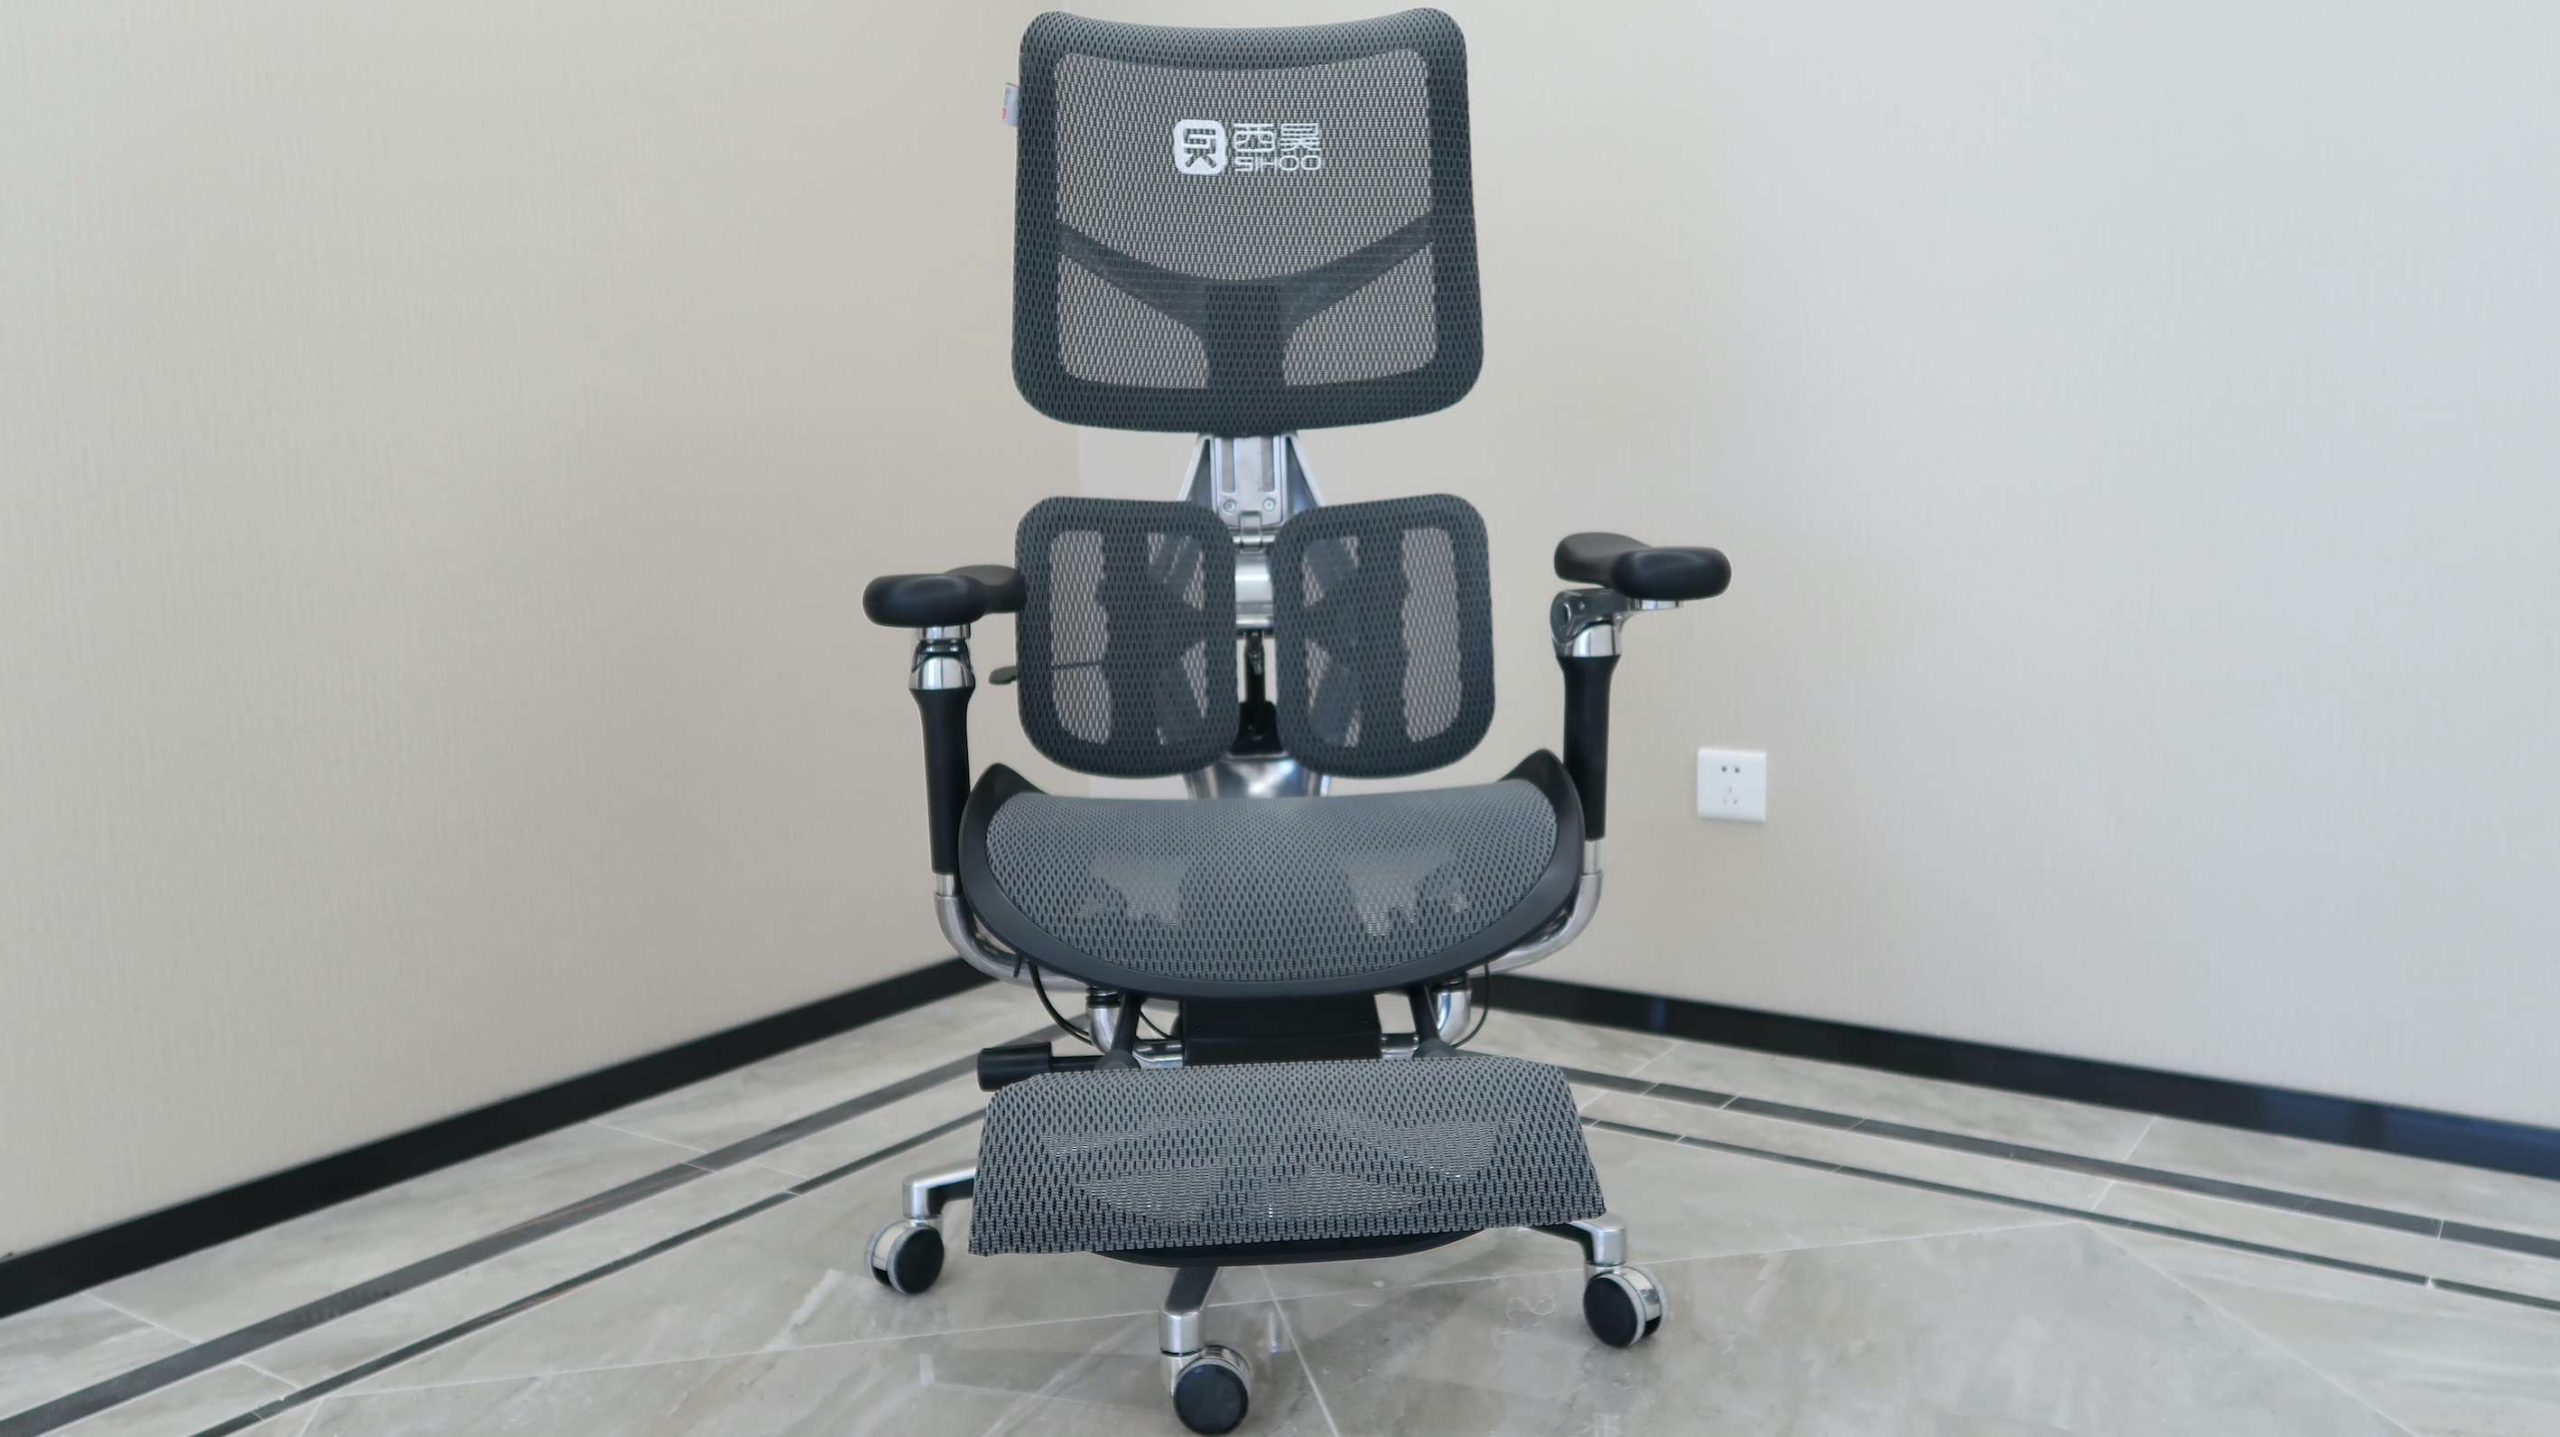 Doro-C300 Innovative Chair